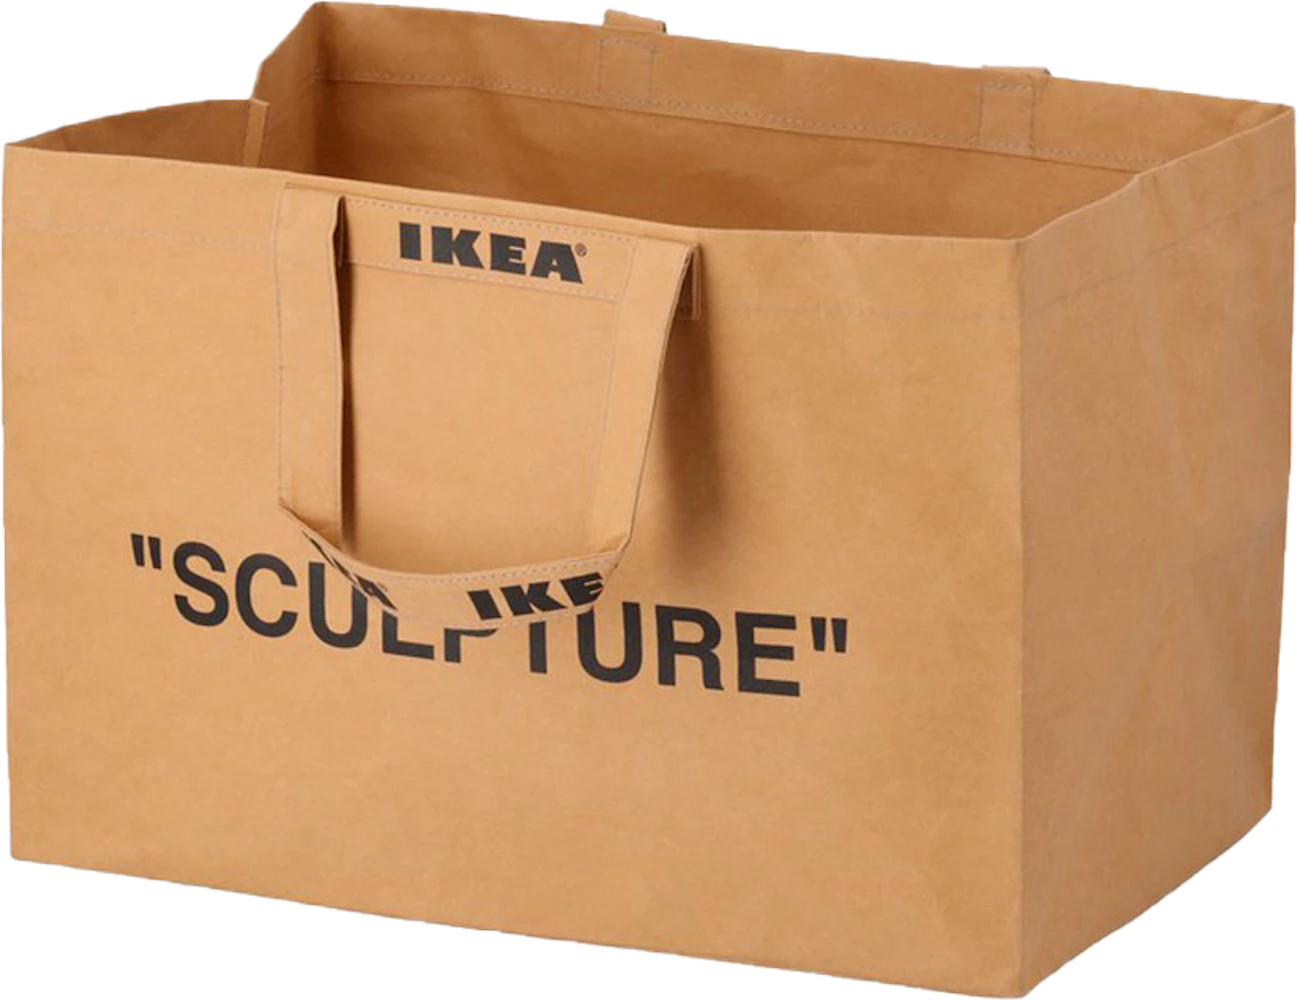 Ikea Sculpture Bag